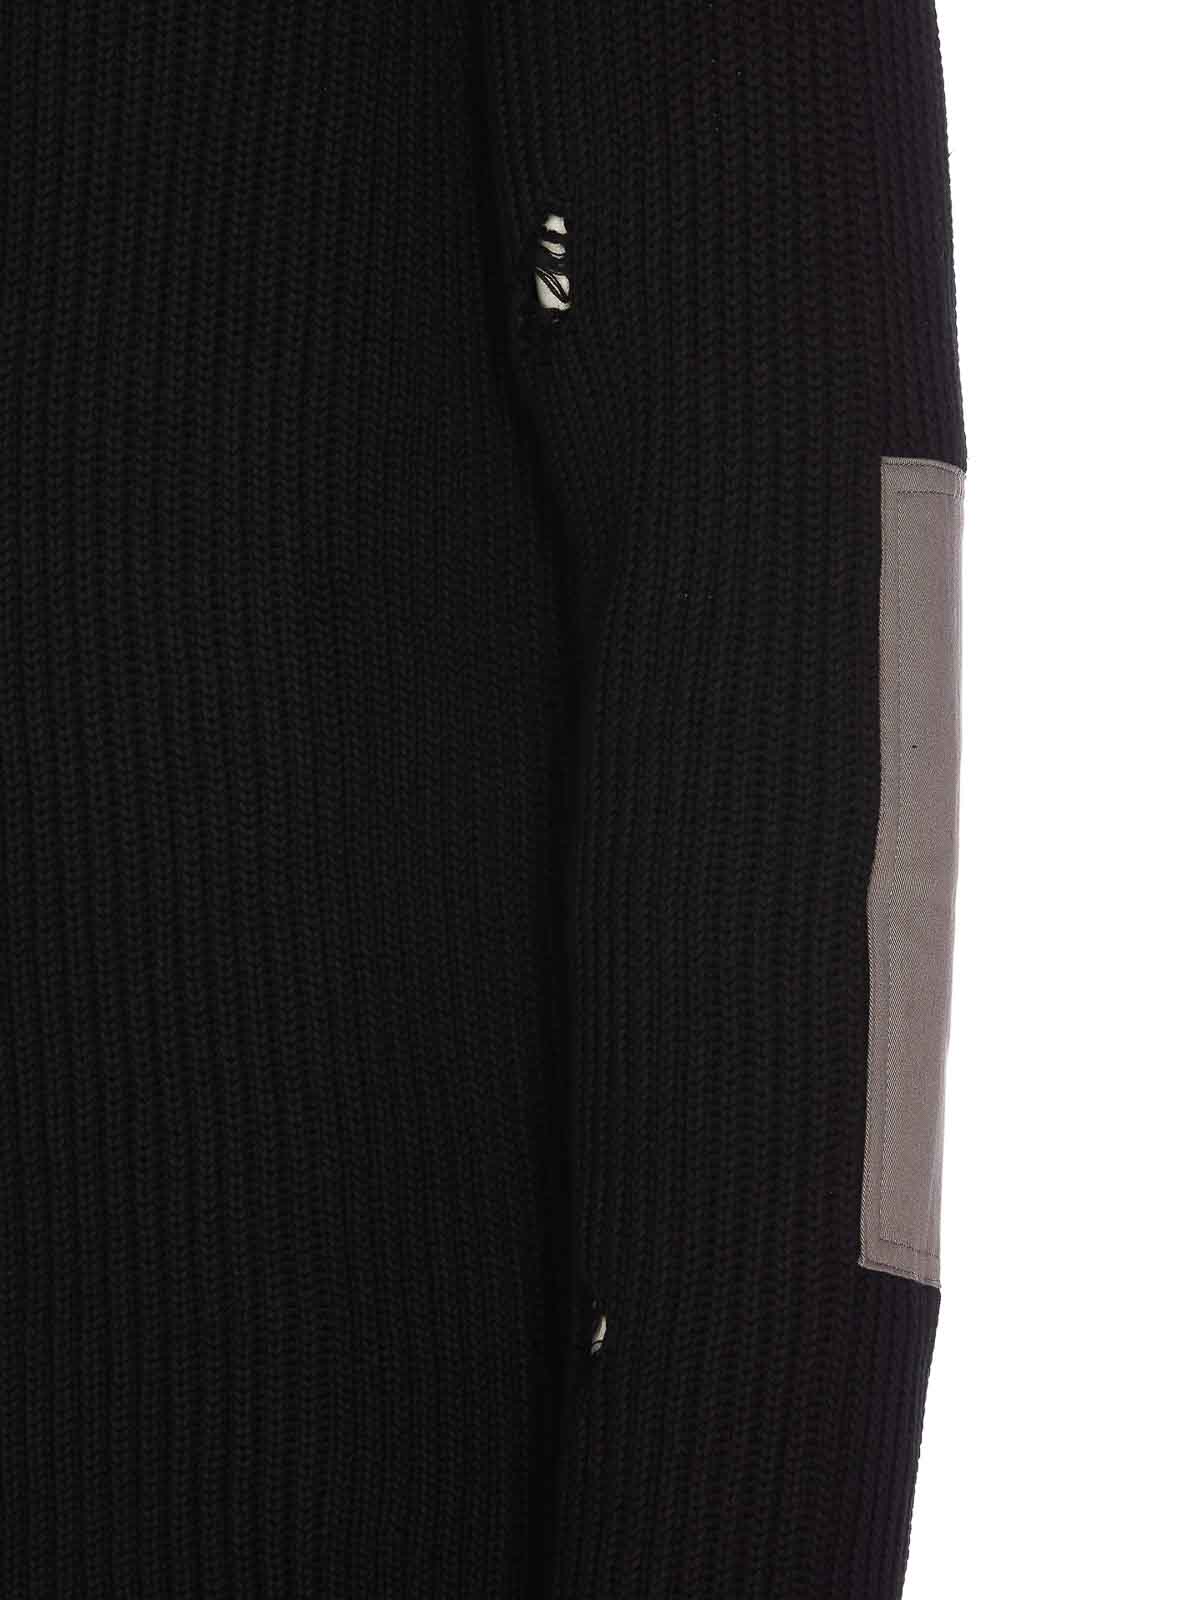 Shop Mm6 Maison Margiela Black Sweater Distressed Round Collar